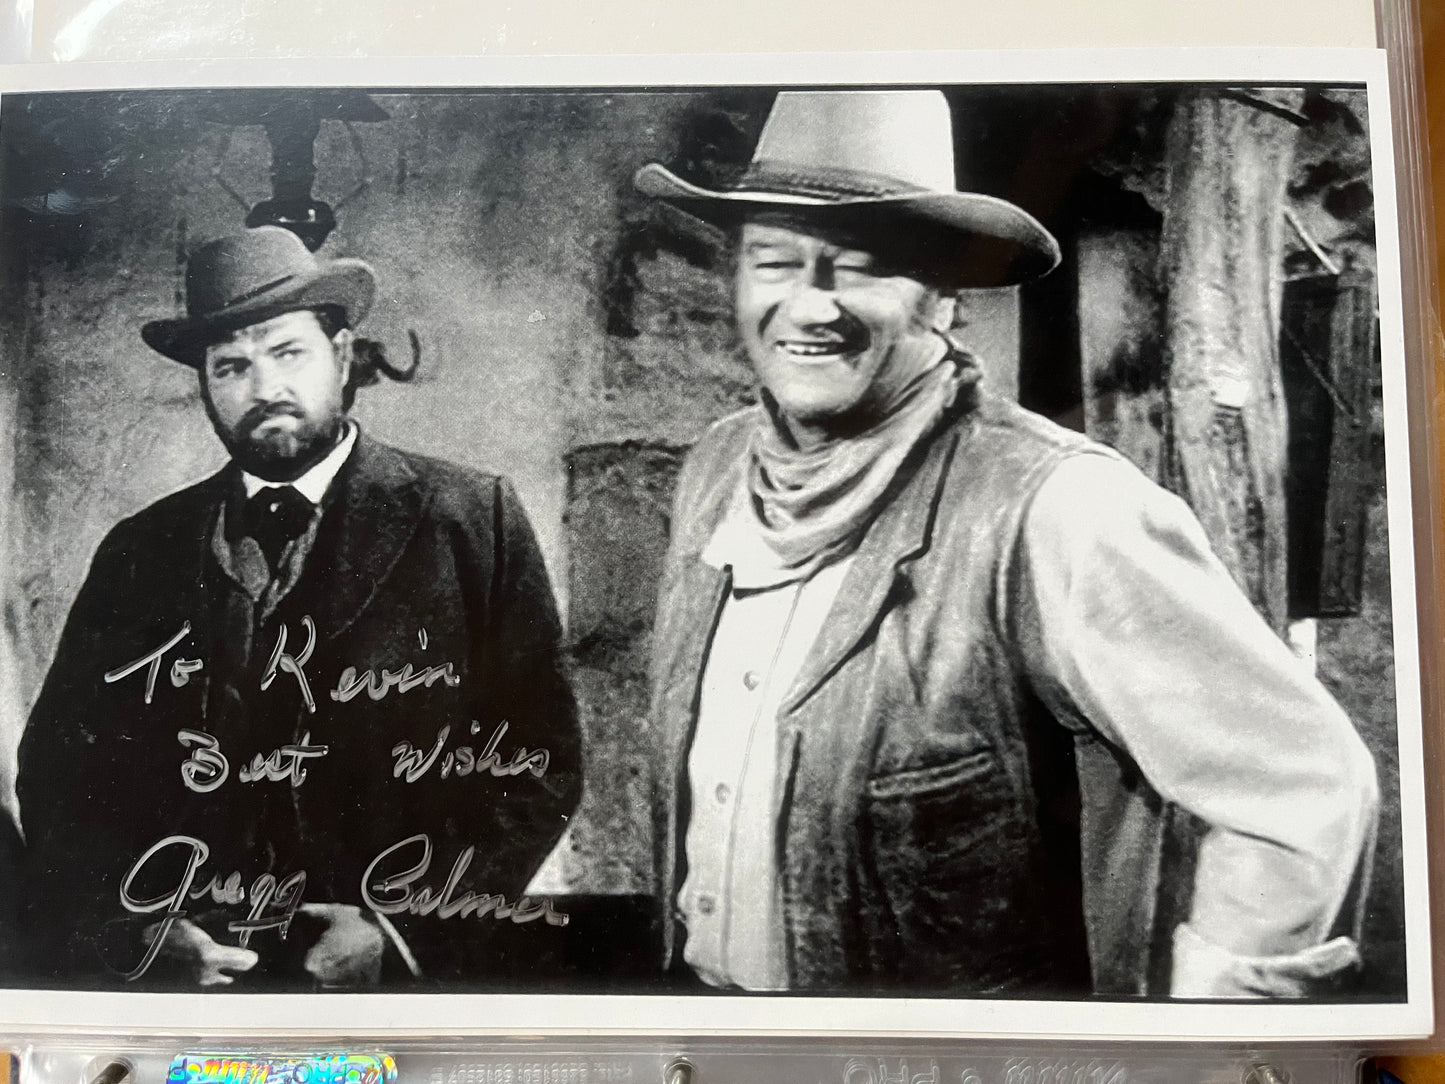 GREGG PALMER, cowboy star, autograph